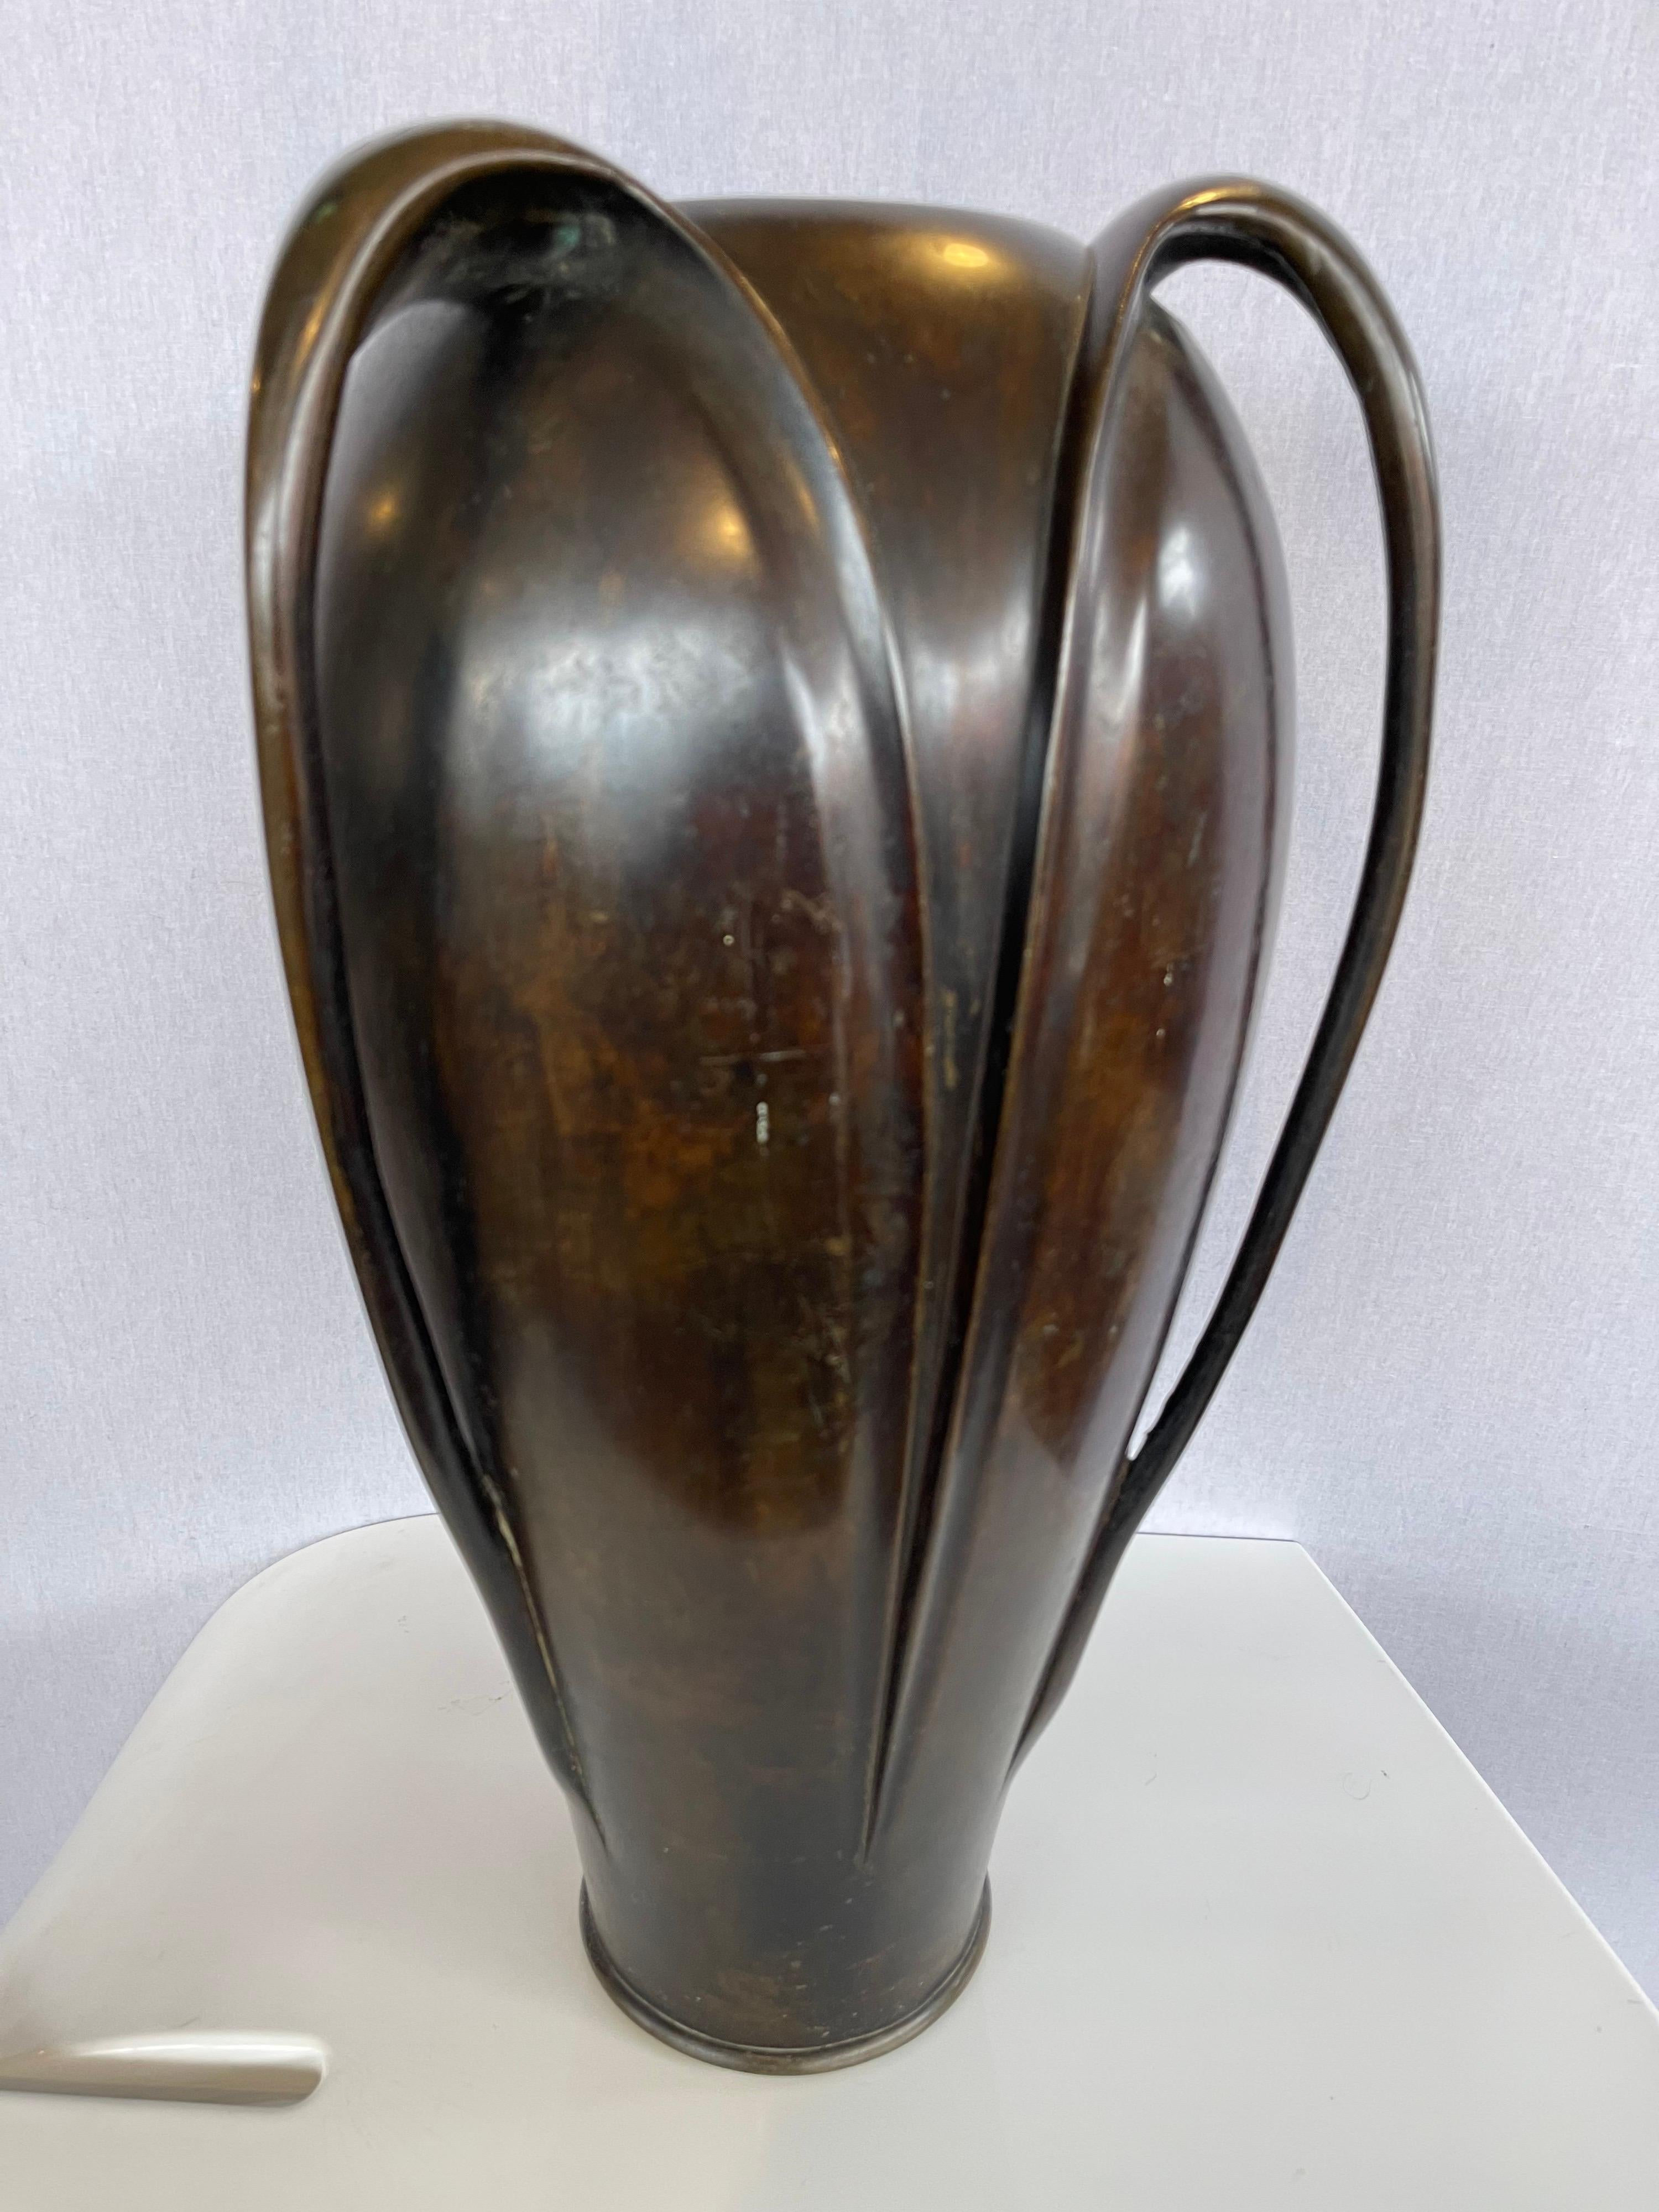 Antique Japanese Art Nouveau Patinated Bronze Tall Vase Vessel Tri-Handled 1